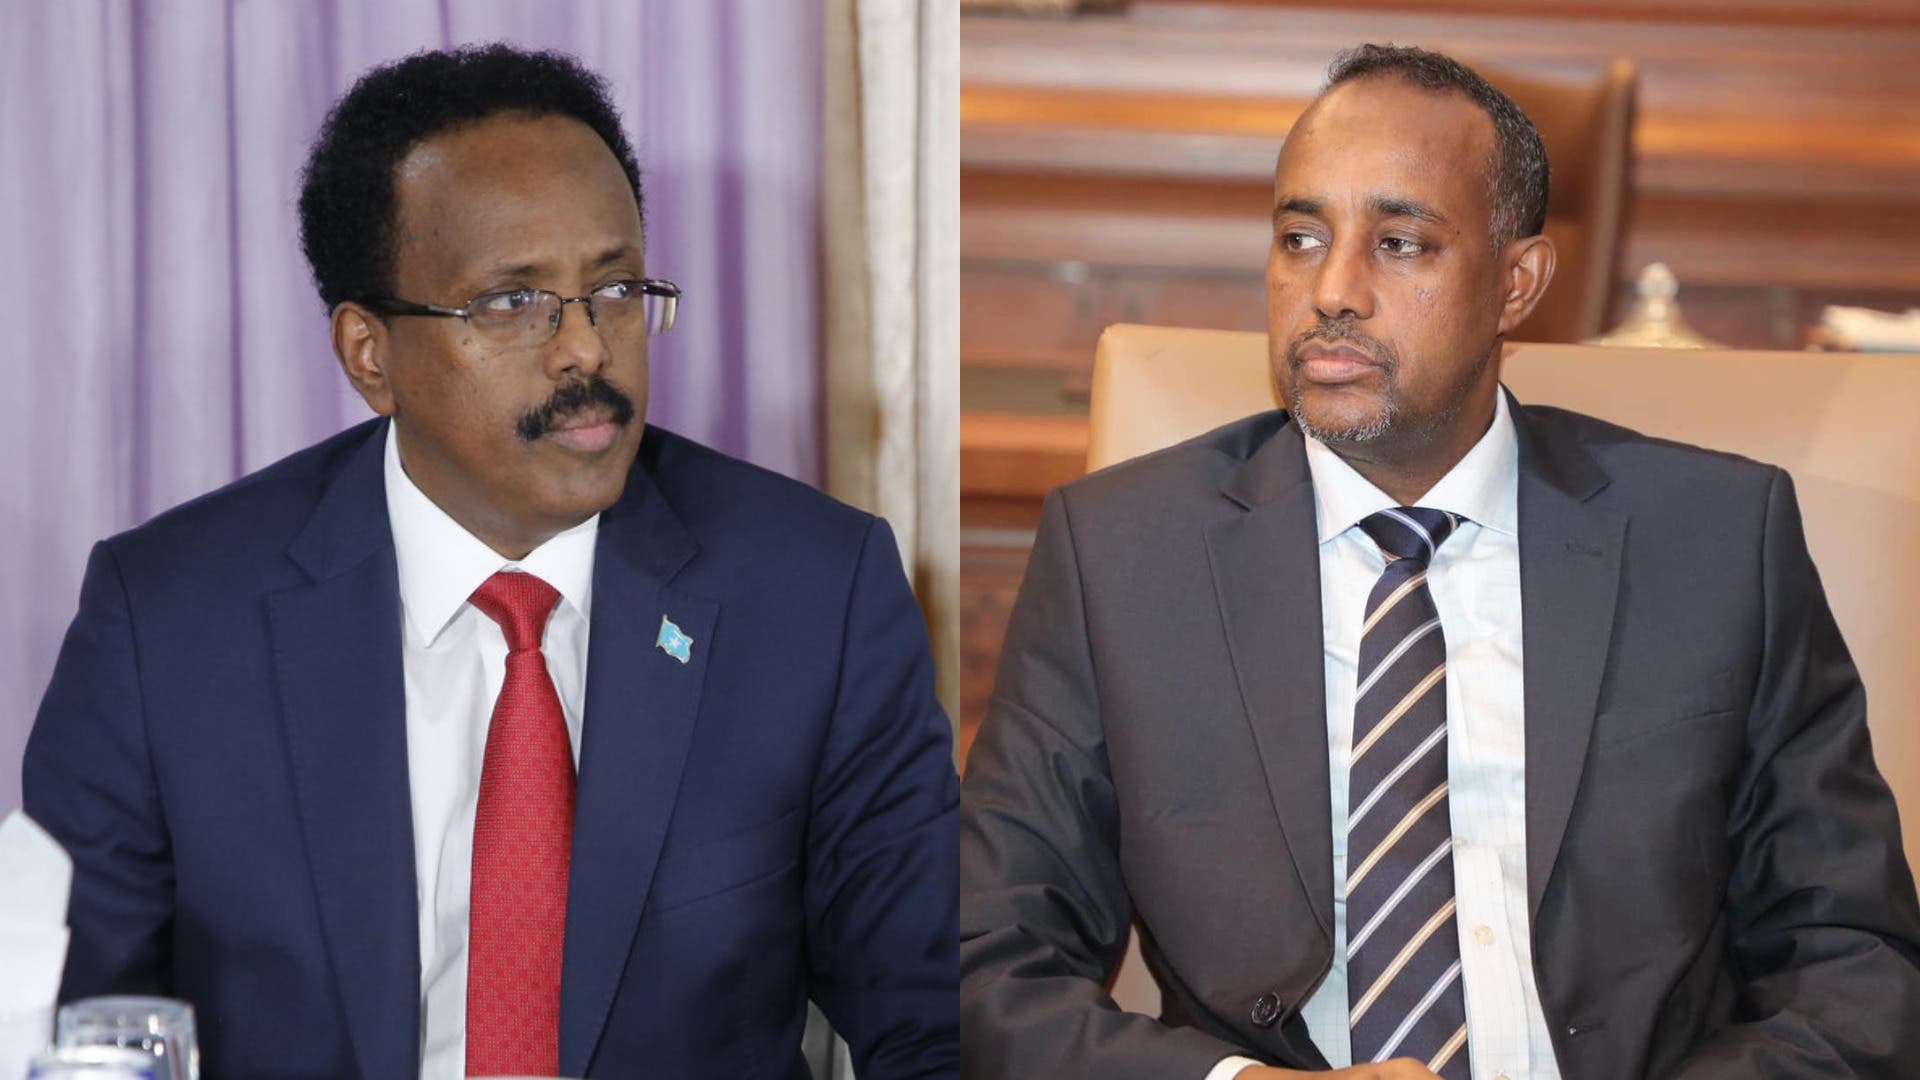 US urges Somali leaders to cease escalatory rhetoric